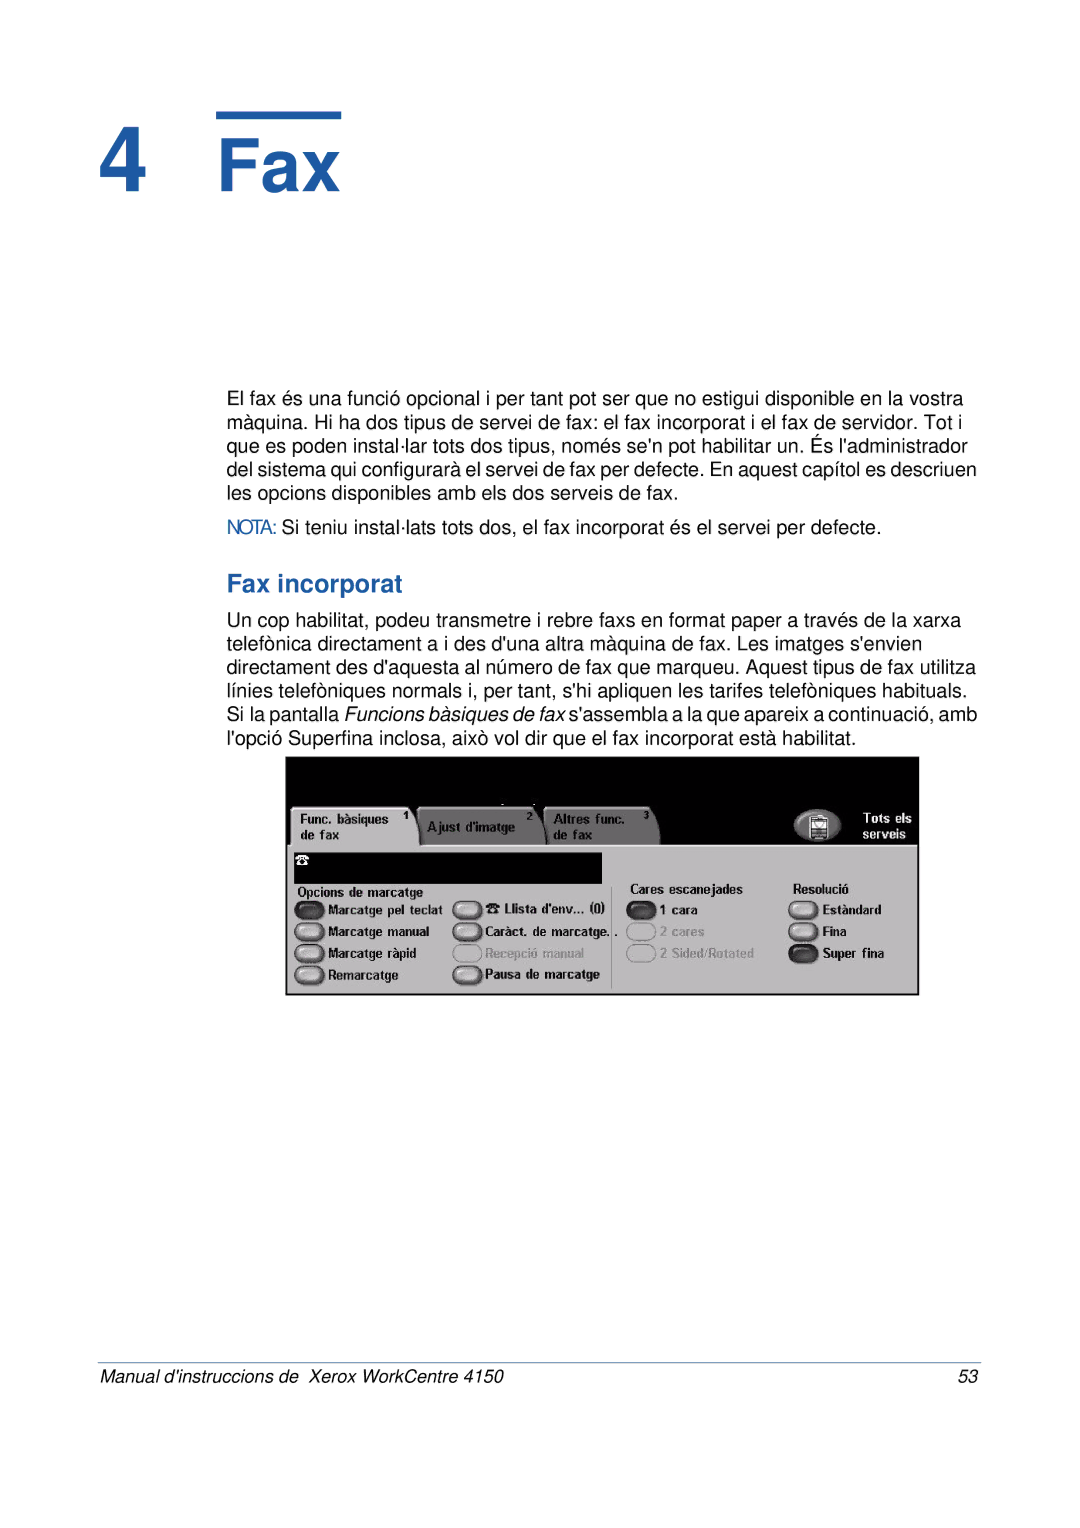 Xerox 5.0 24.03.06 manual Fax incorporat 